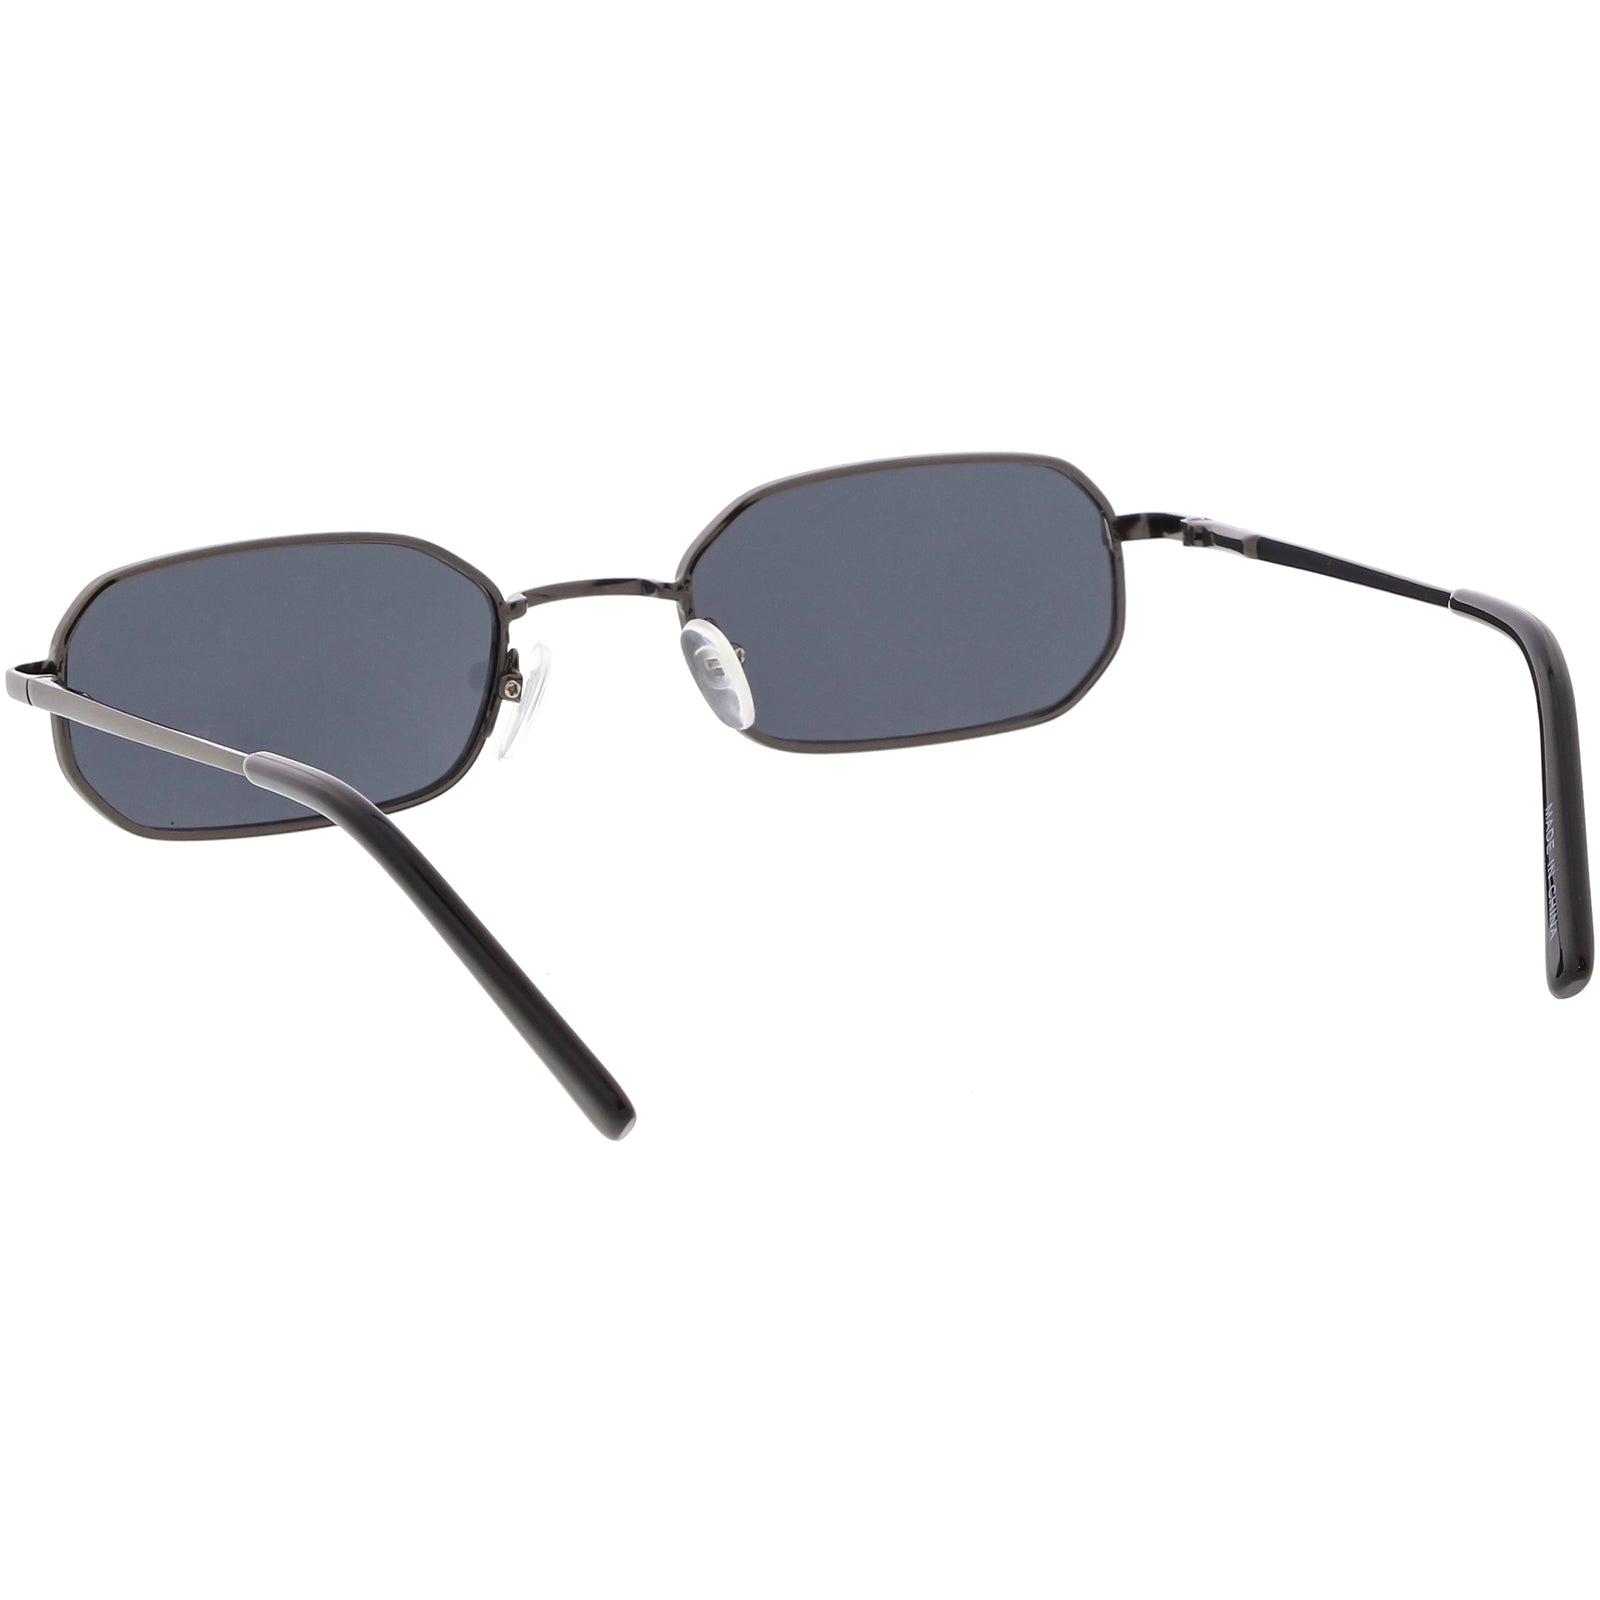 EYLRIM Thick Square Frame Sunglasses for Women Men Chunky Rectangle  Polarized Sunglasses UV400 Protection